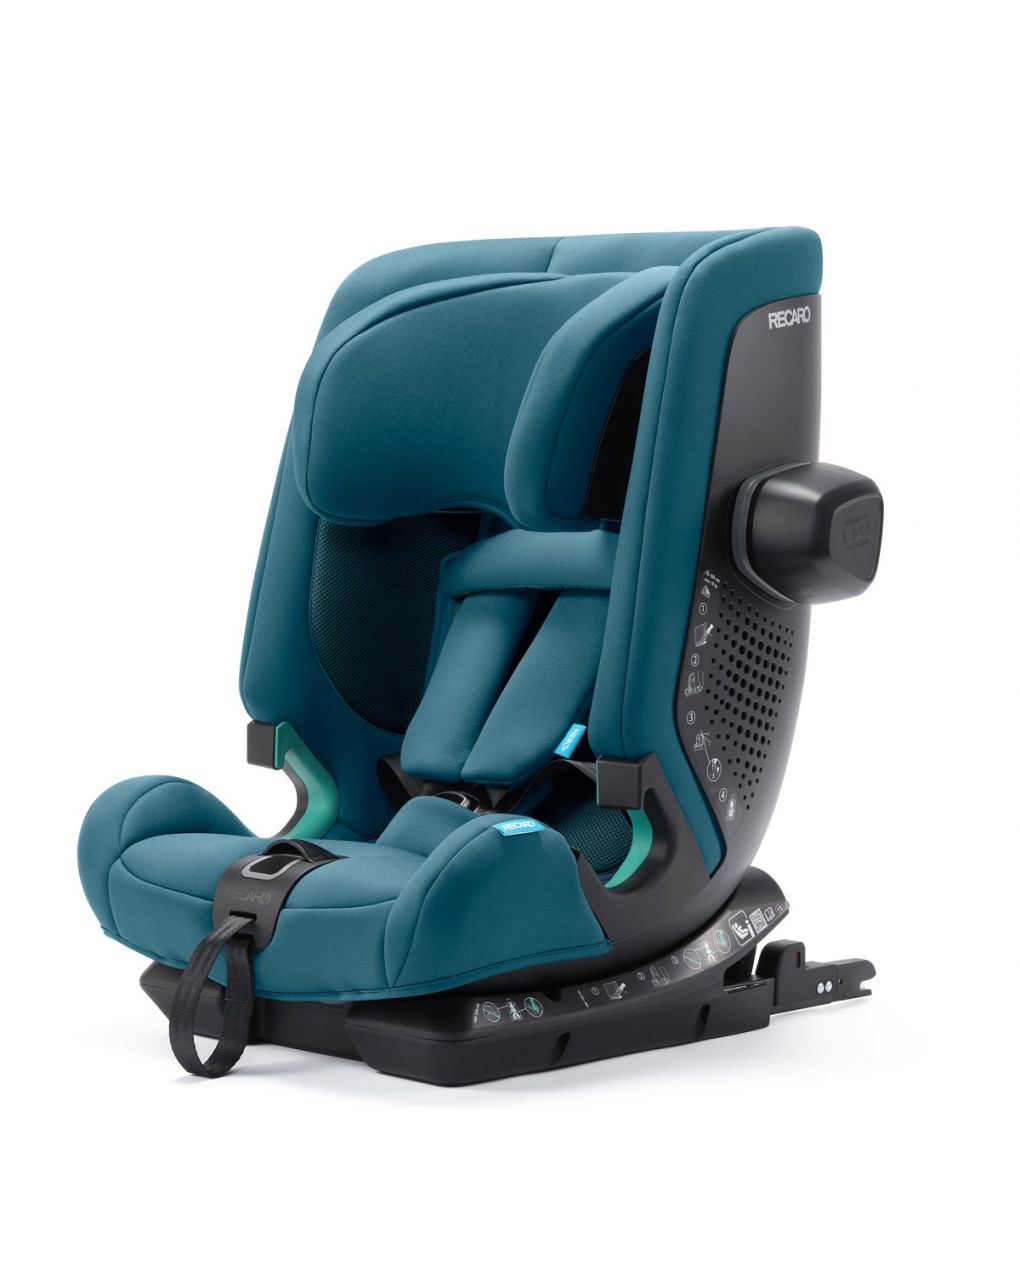 Recaro παιδικό κάθισμα αυτοκινήτου toria elite select teal green - Recaro